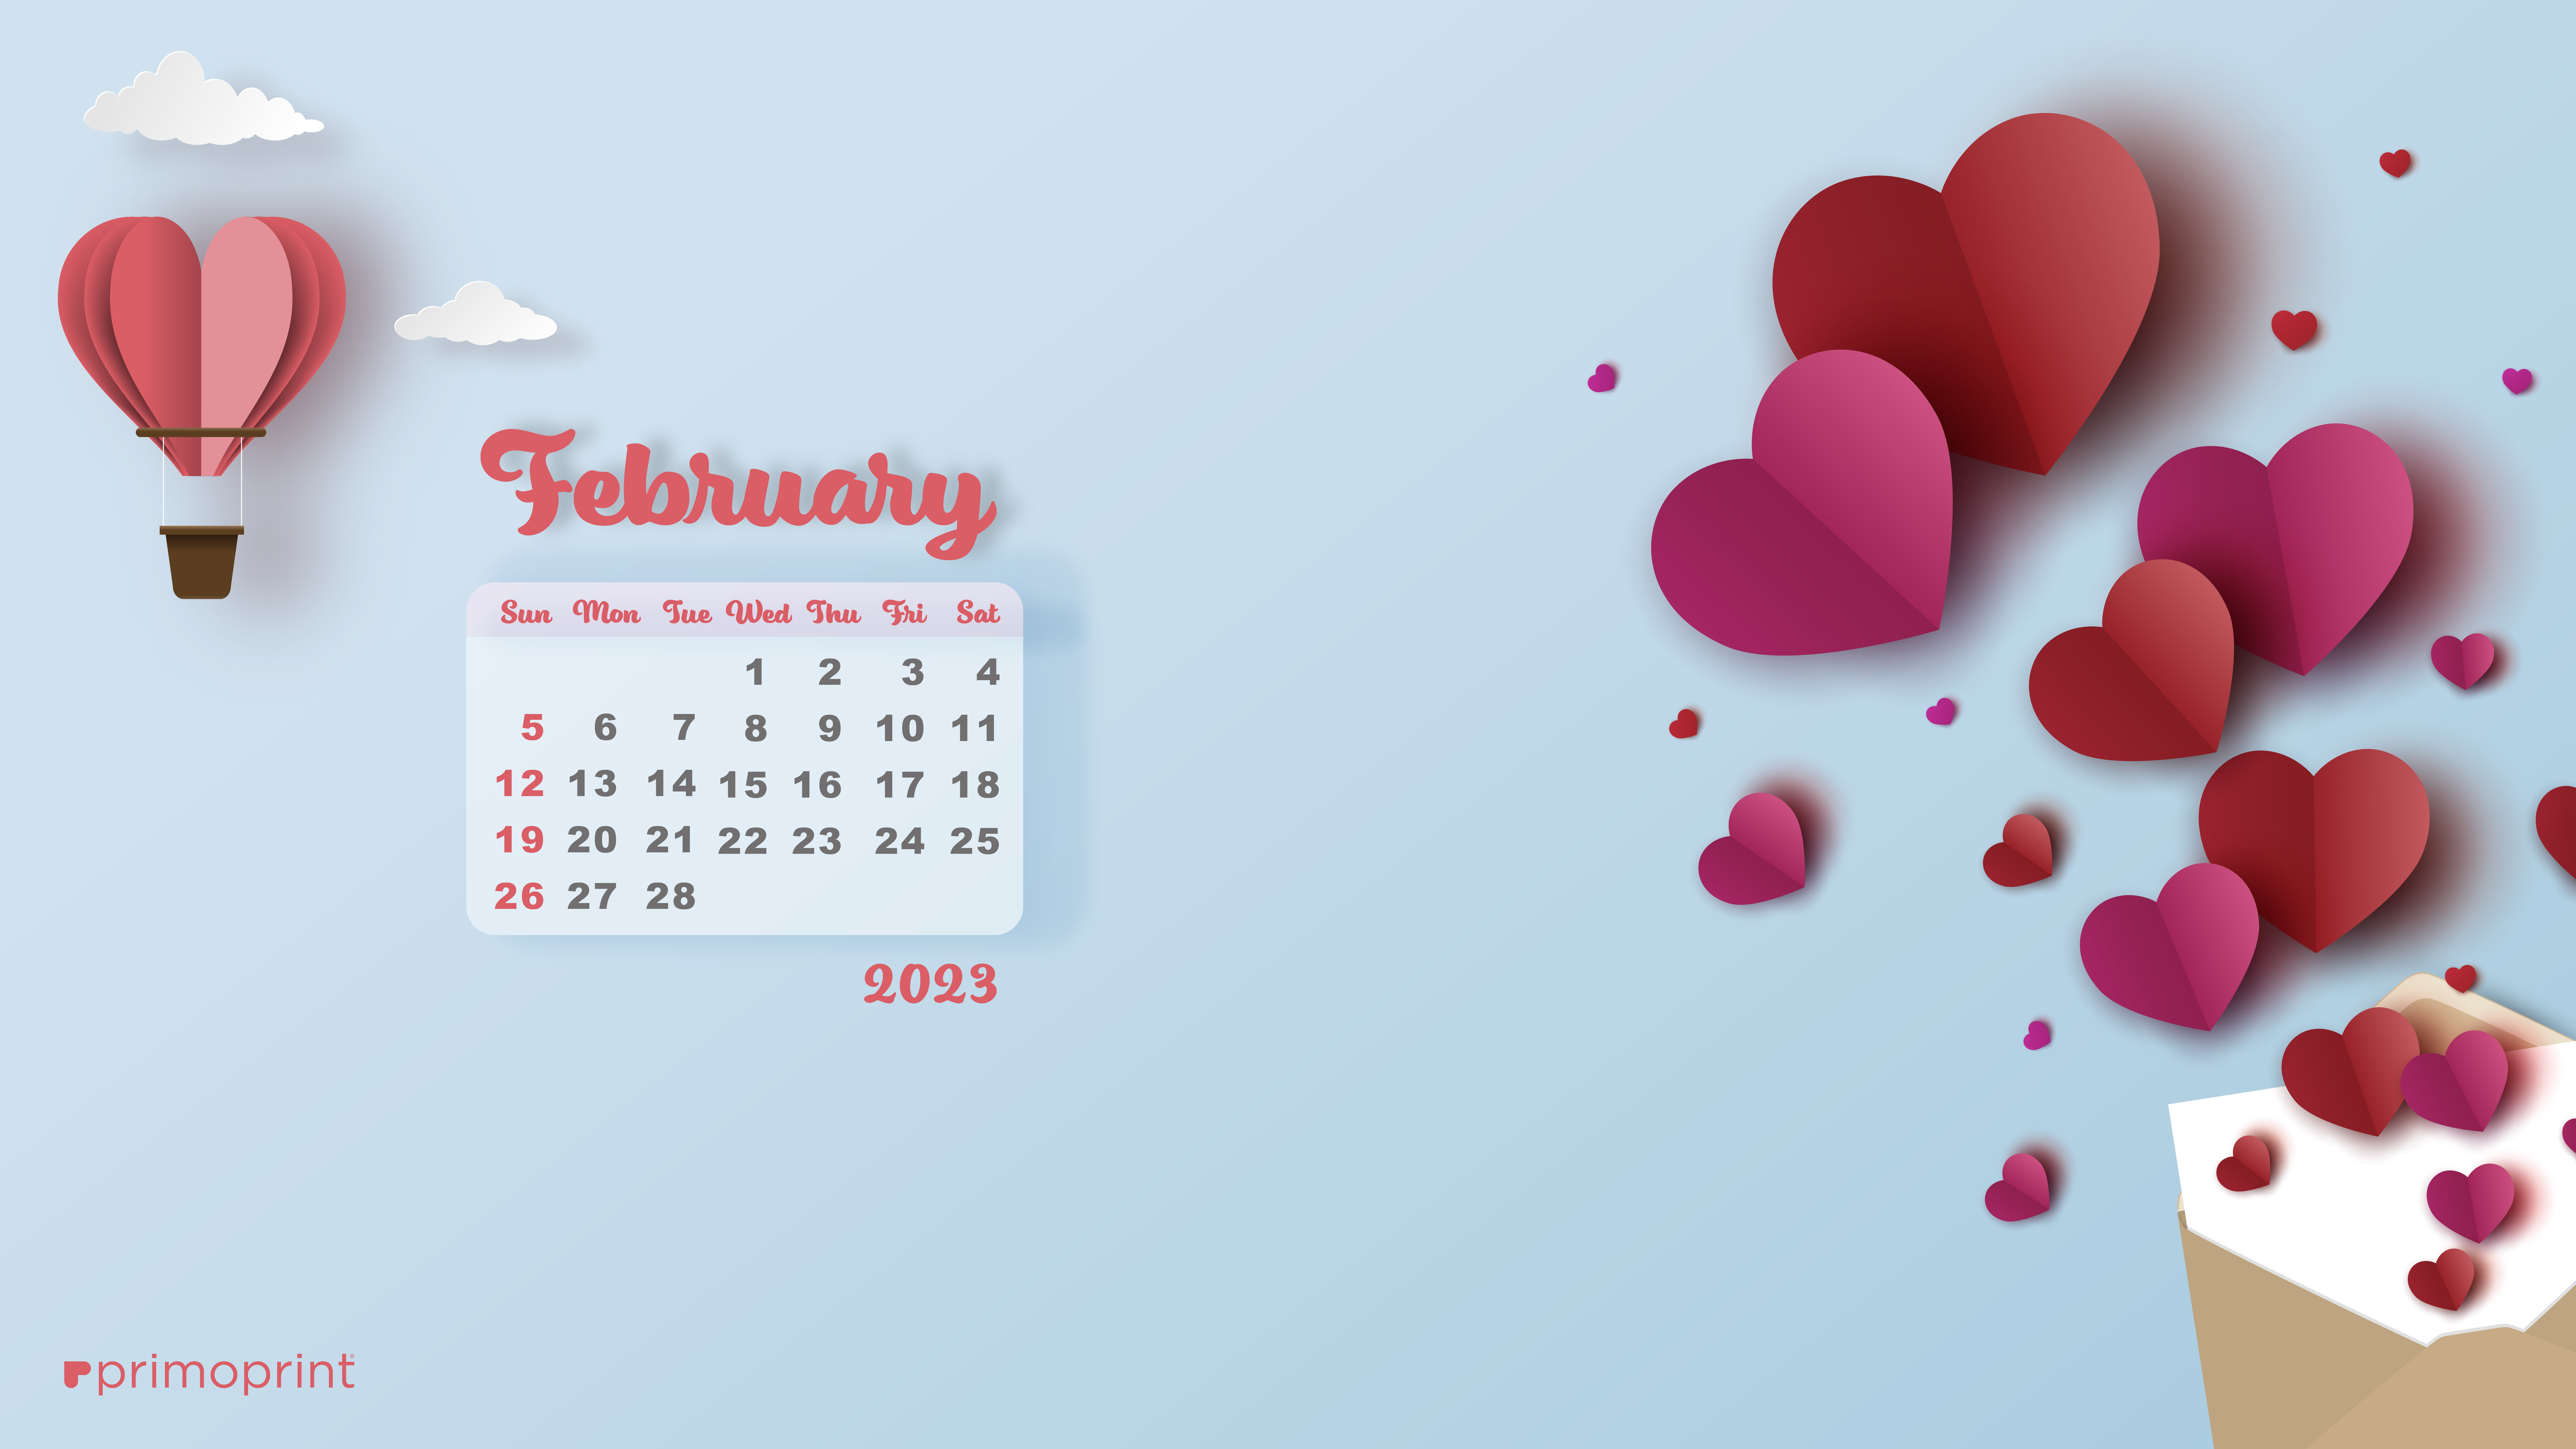 Free February 2023 Calendar Wallpapers  Desktop  Mobile